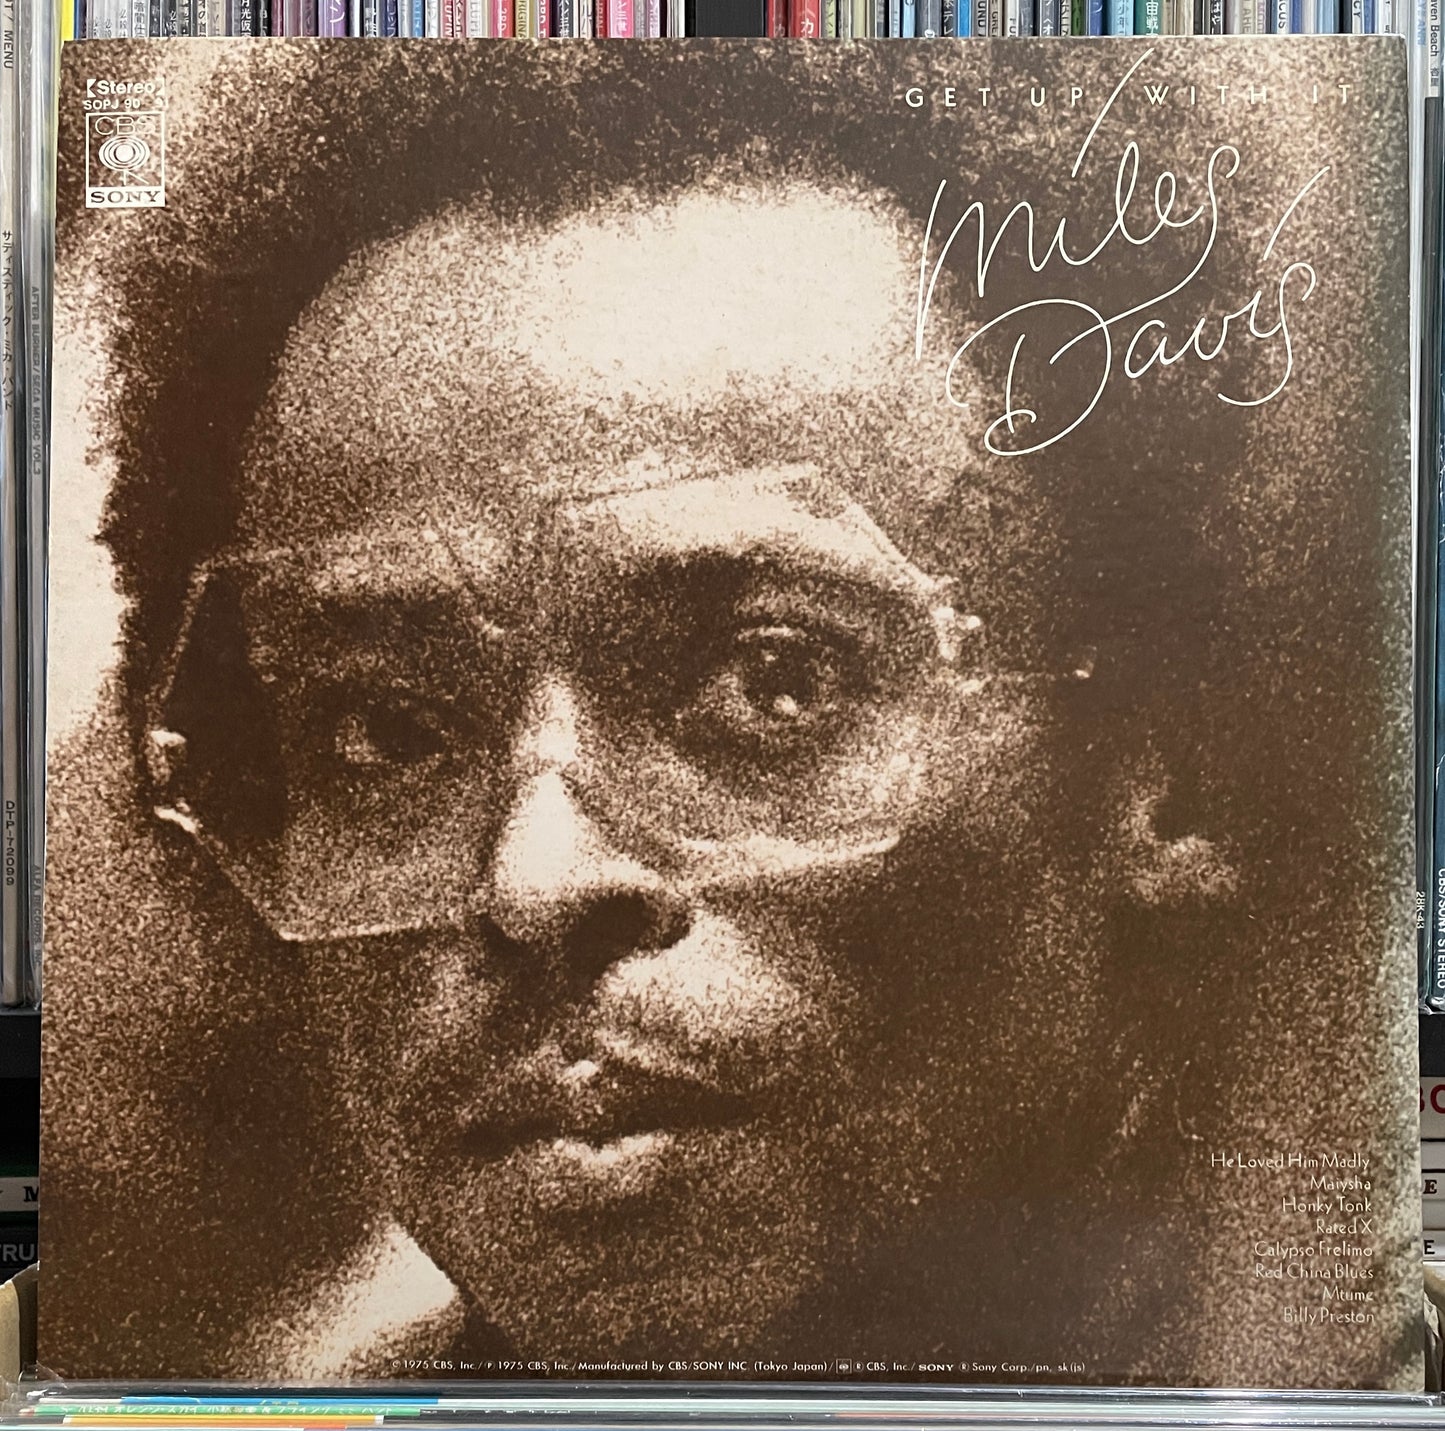 Miles Davis "Get Up With It" (1975)